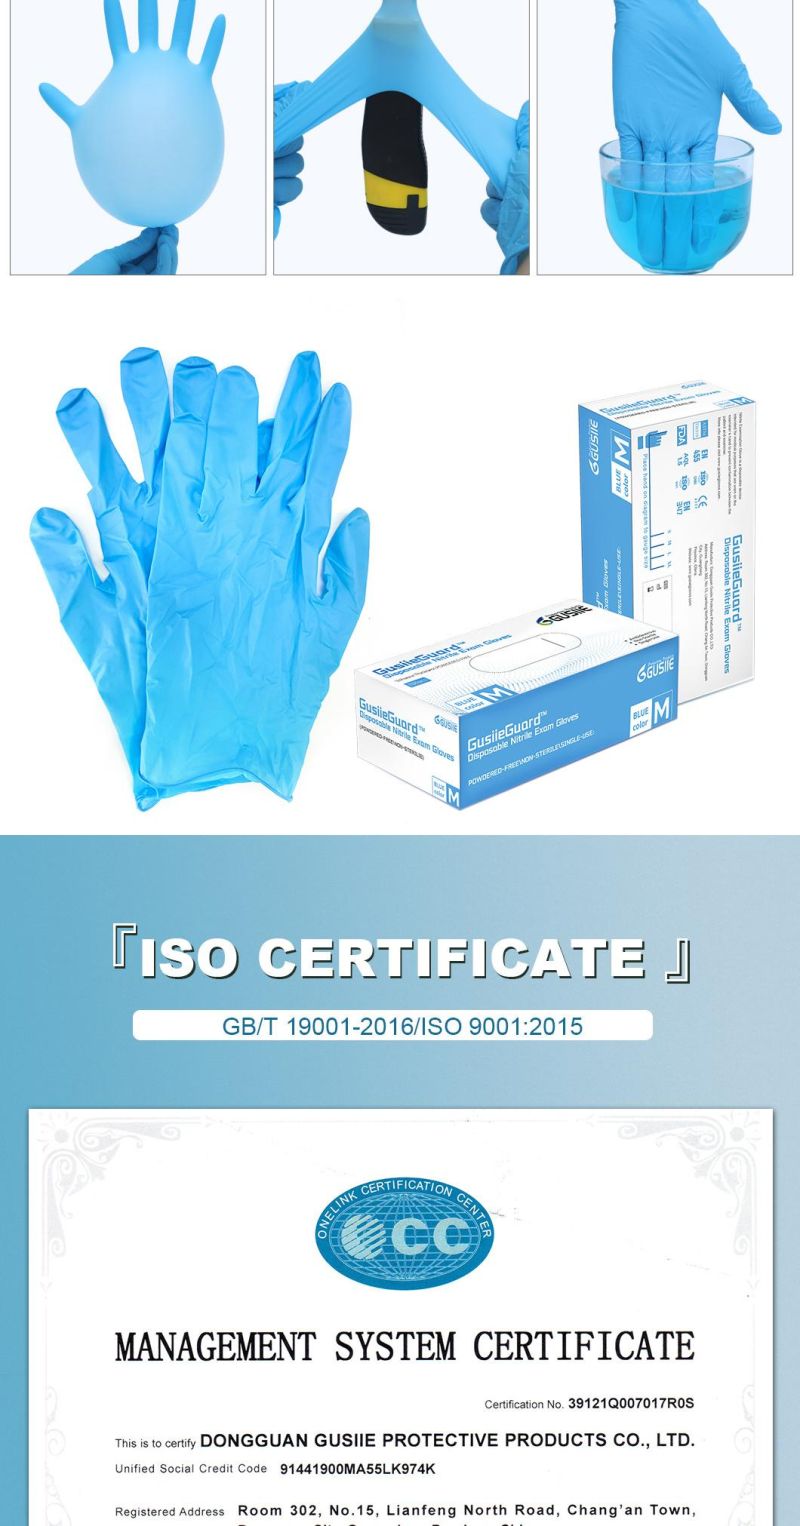 Powder Free Disposable Examination Nitrile Glove Factory Price Work Nitrile Examination Large Gloves